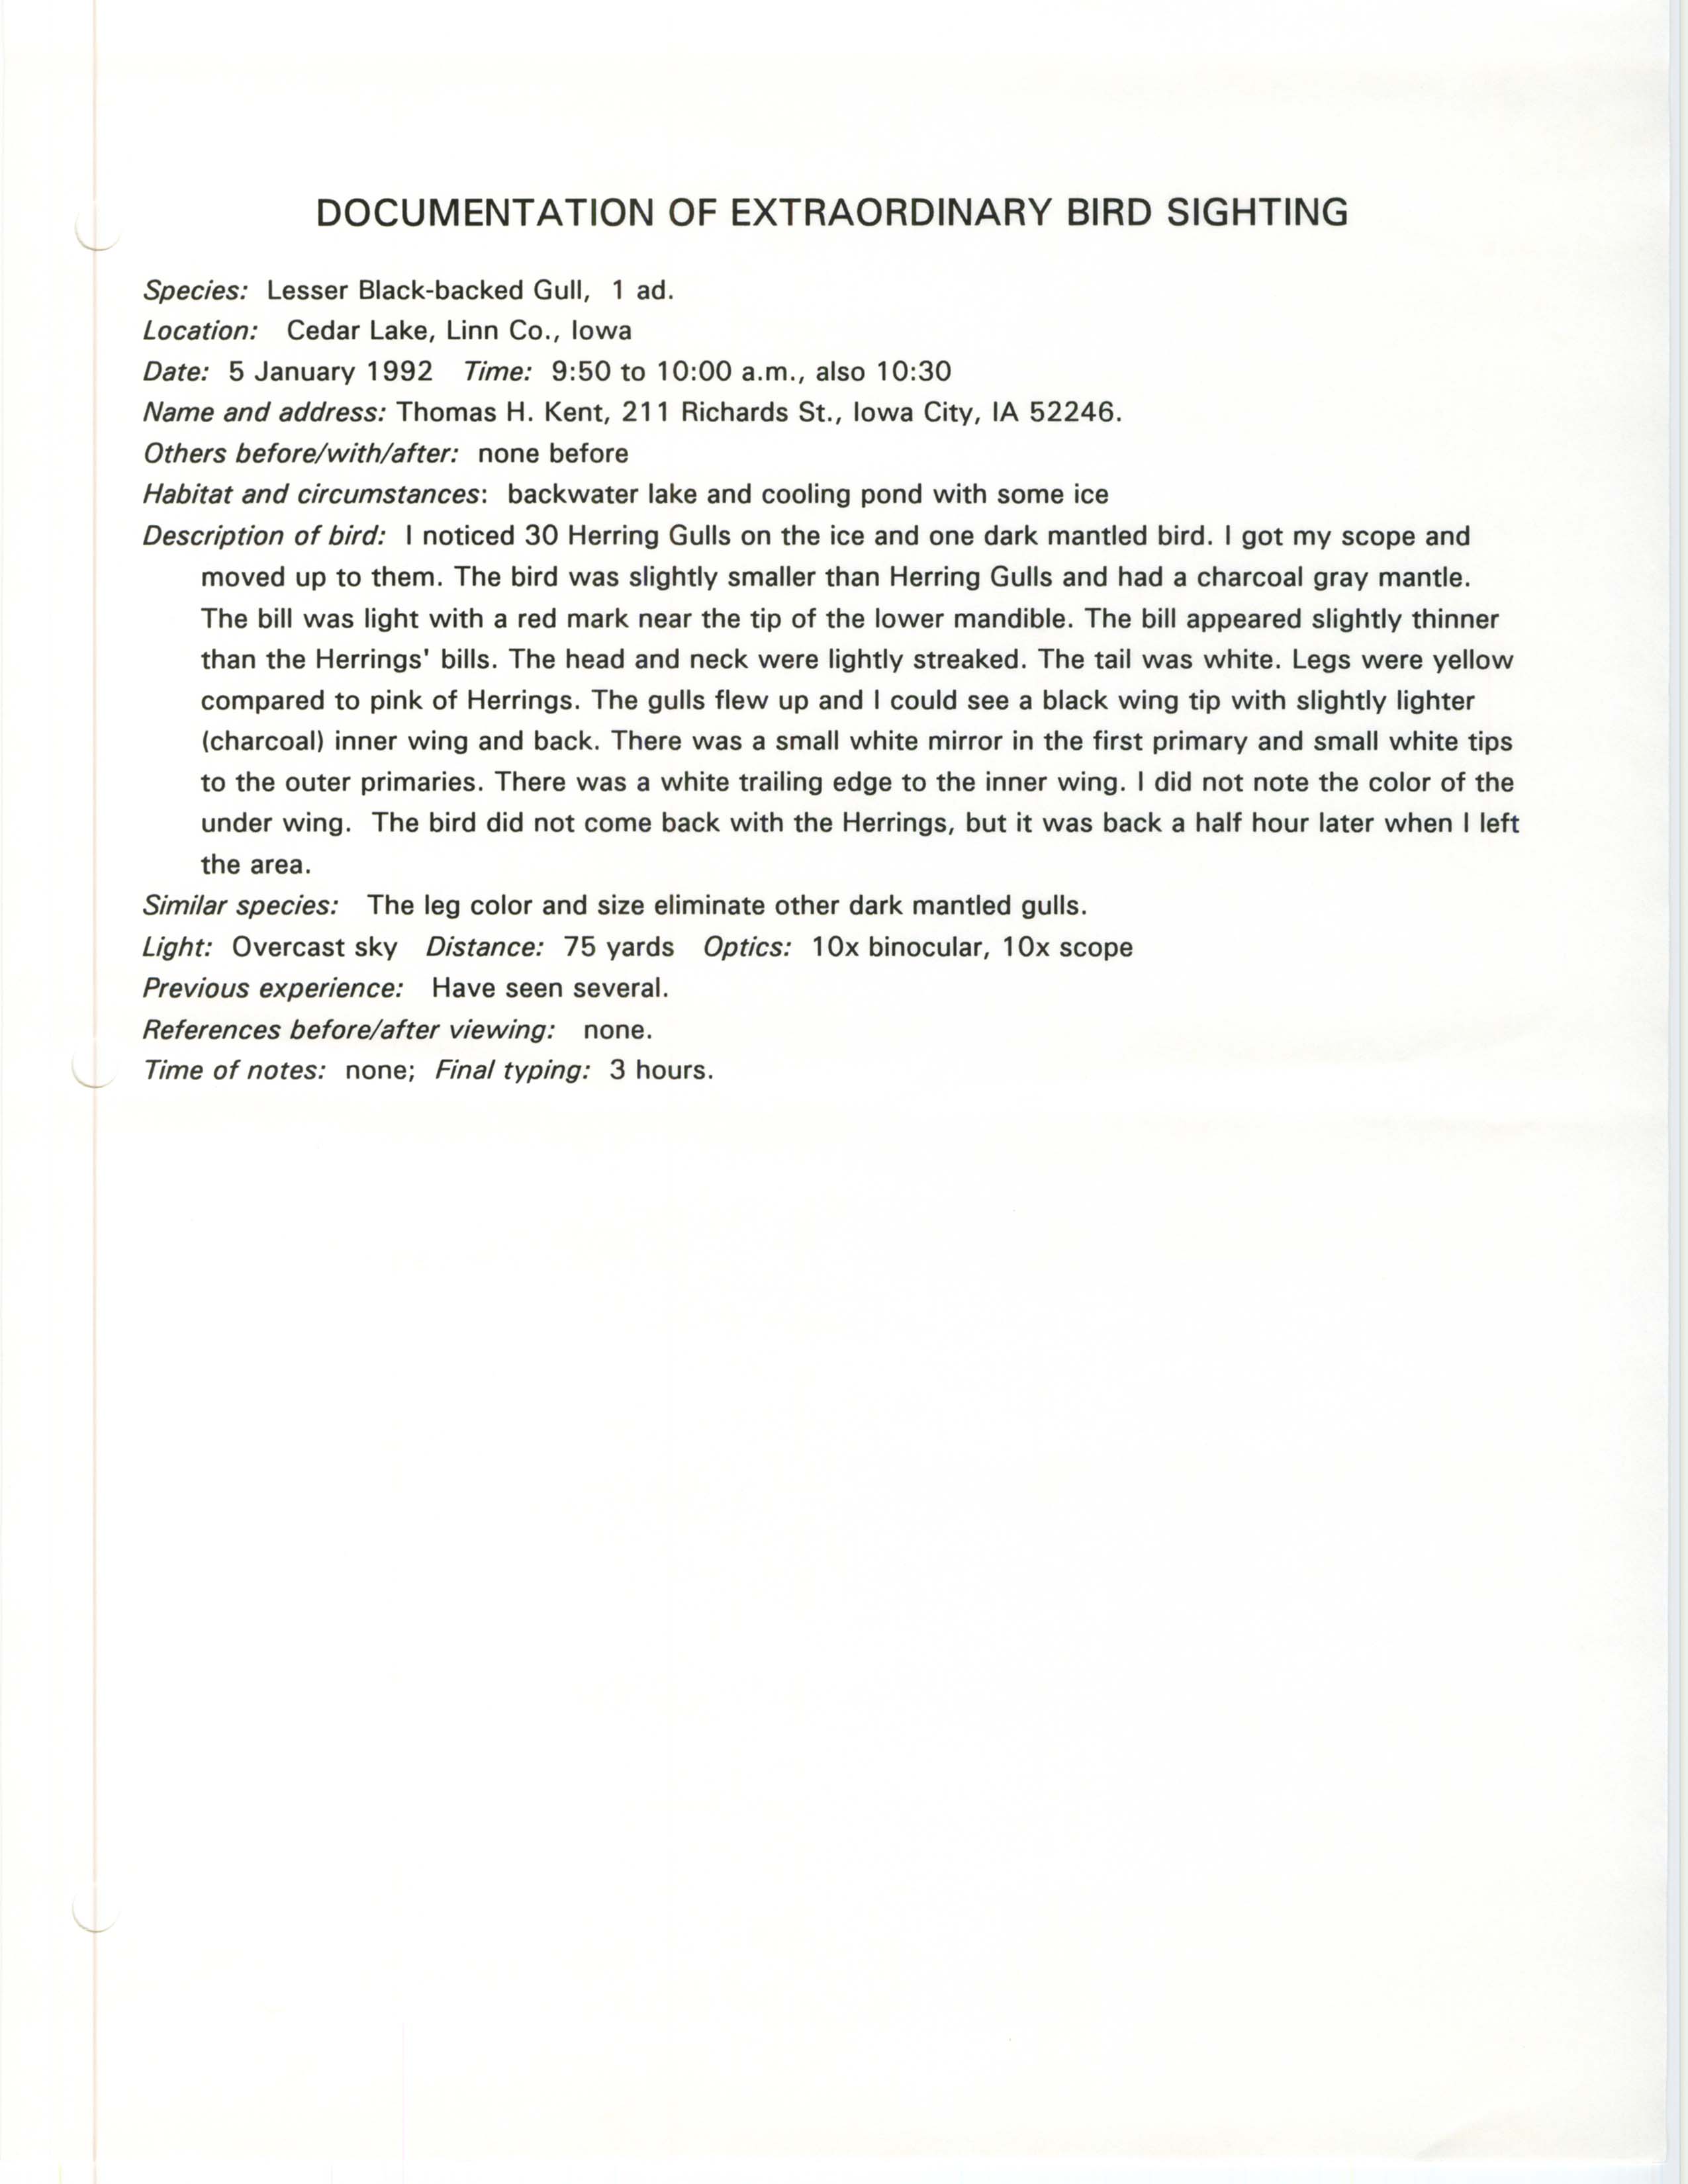 Rare bird documentation form for Lesser Black-backed Gull at Cedar Lake, 1992